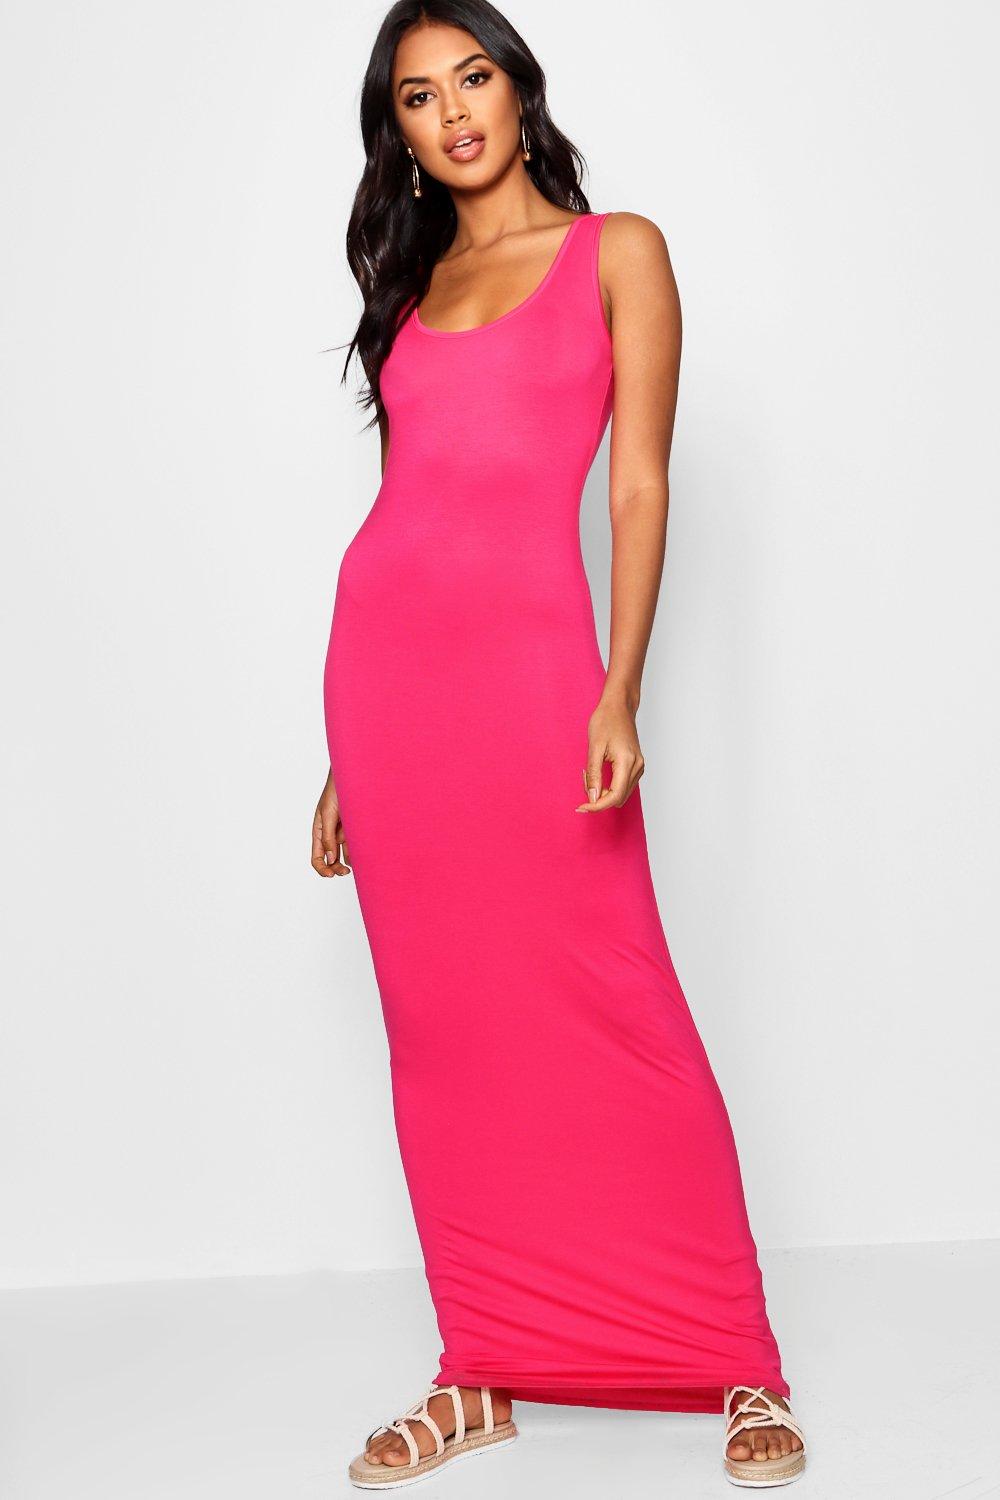 Boohoo.com for Womens Maxi Dress - Pink ...